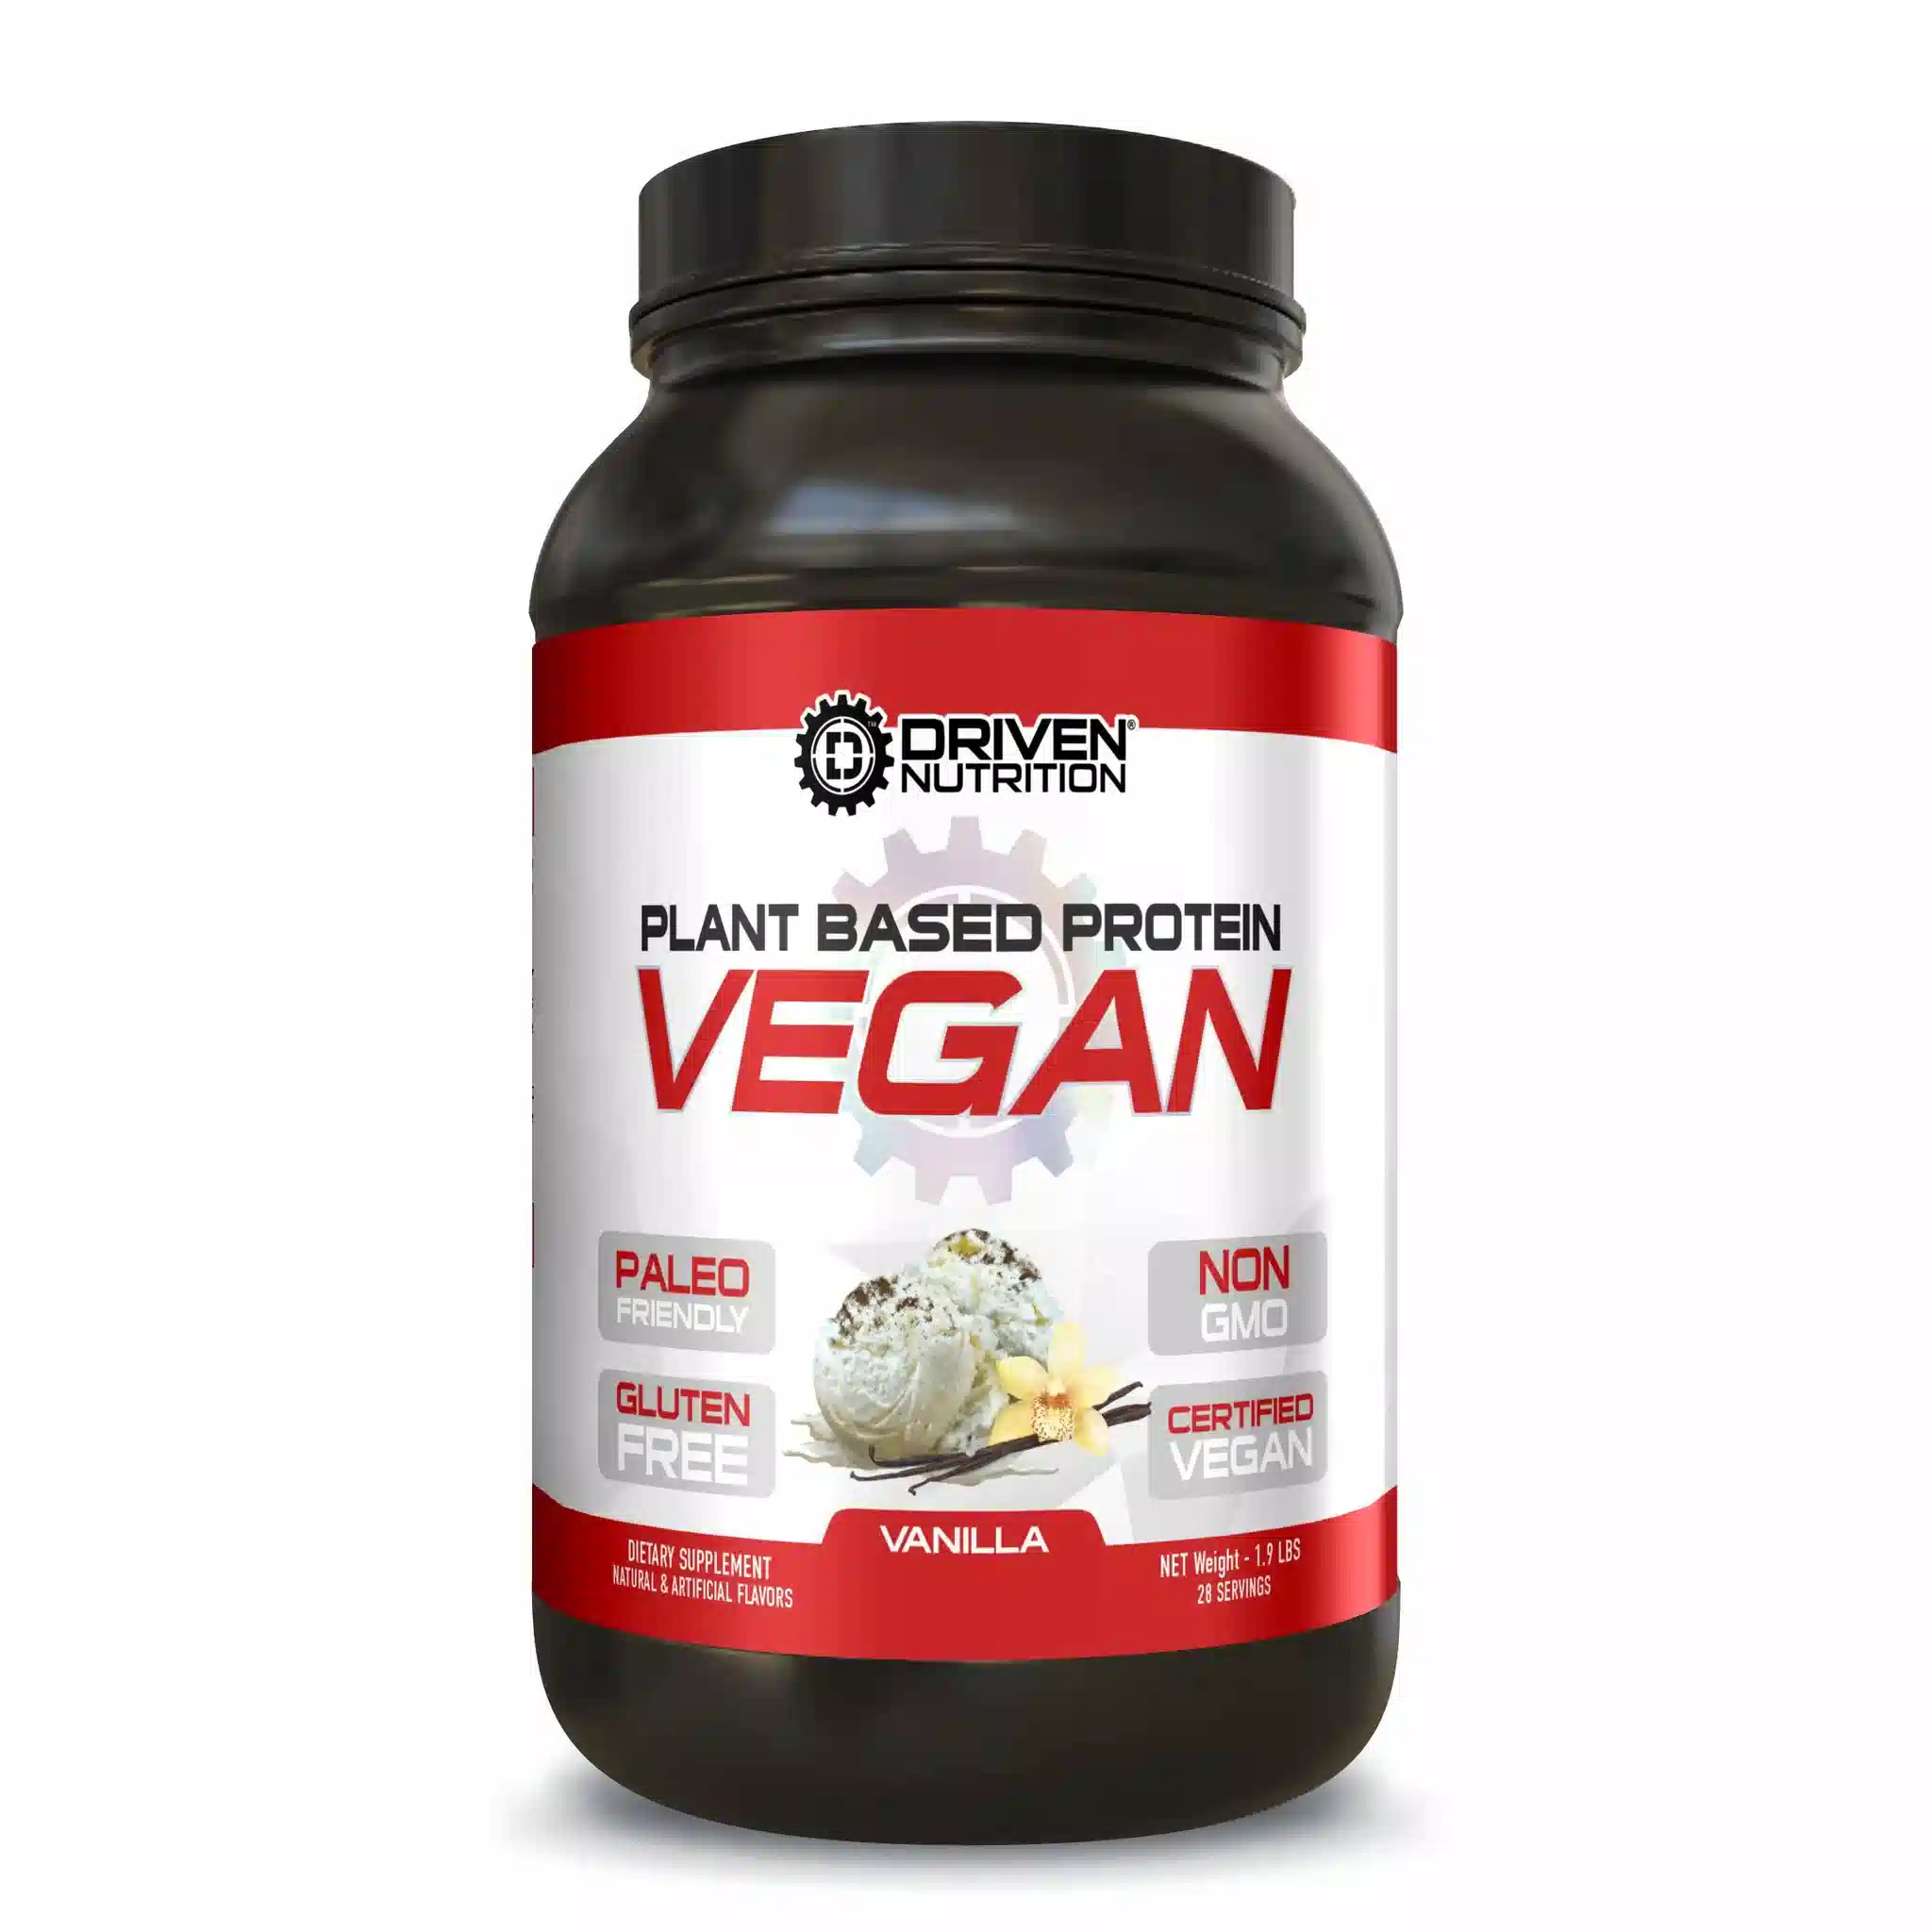 vegan-protein-powder with cash back rebate